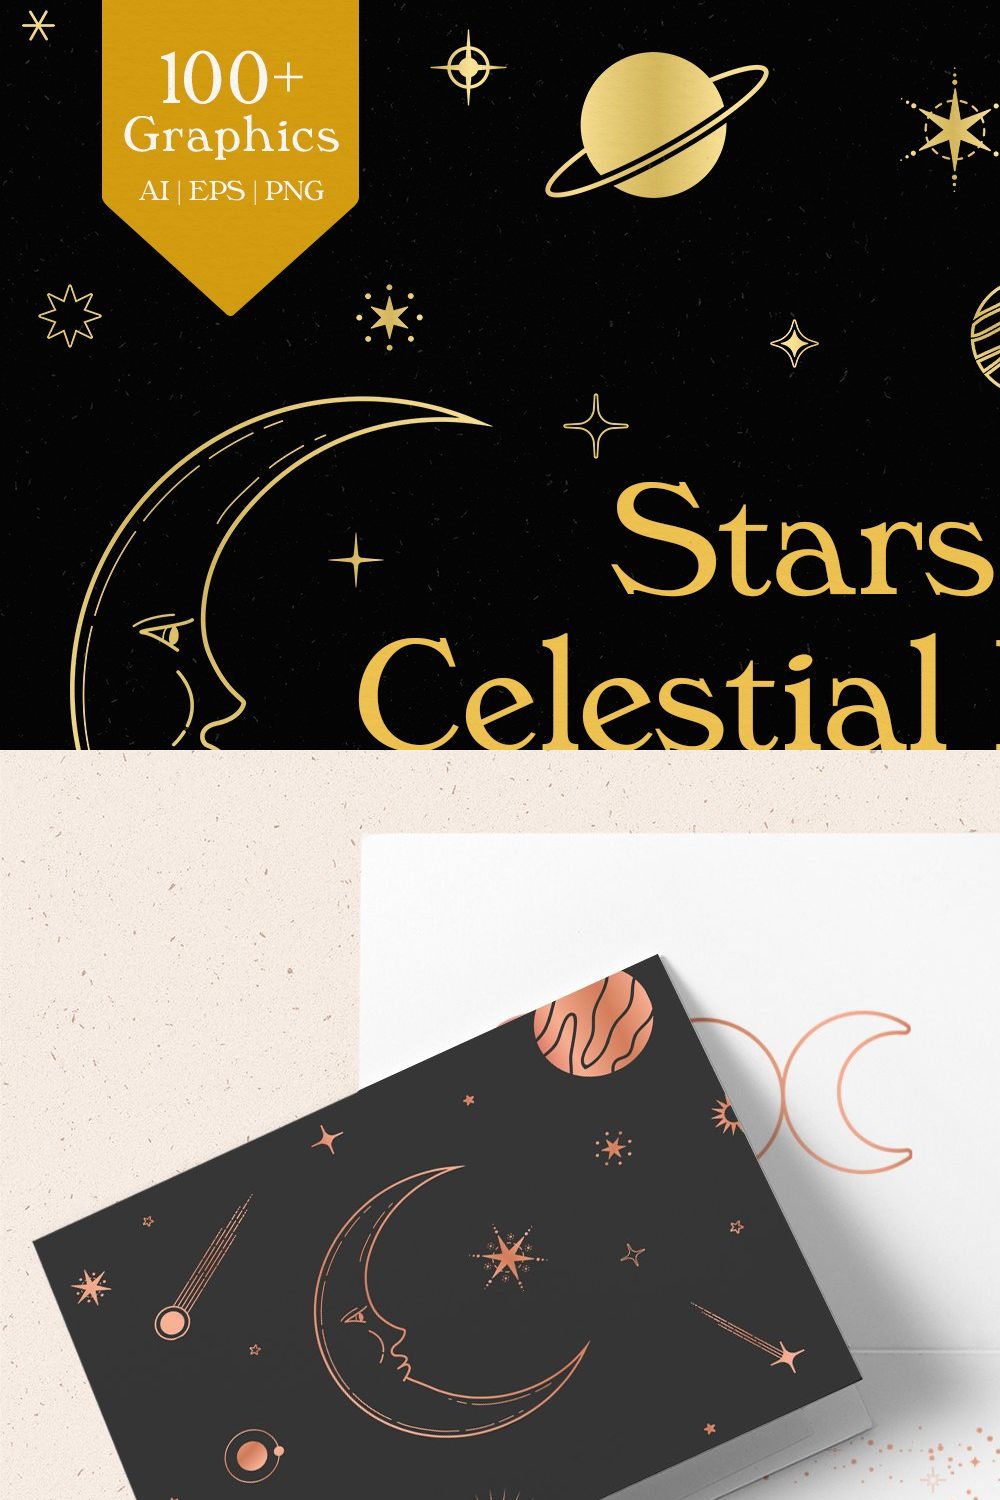 Stars & Celestial Bodies pinterest preview image.